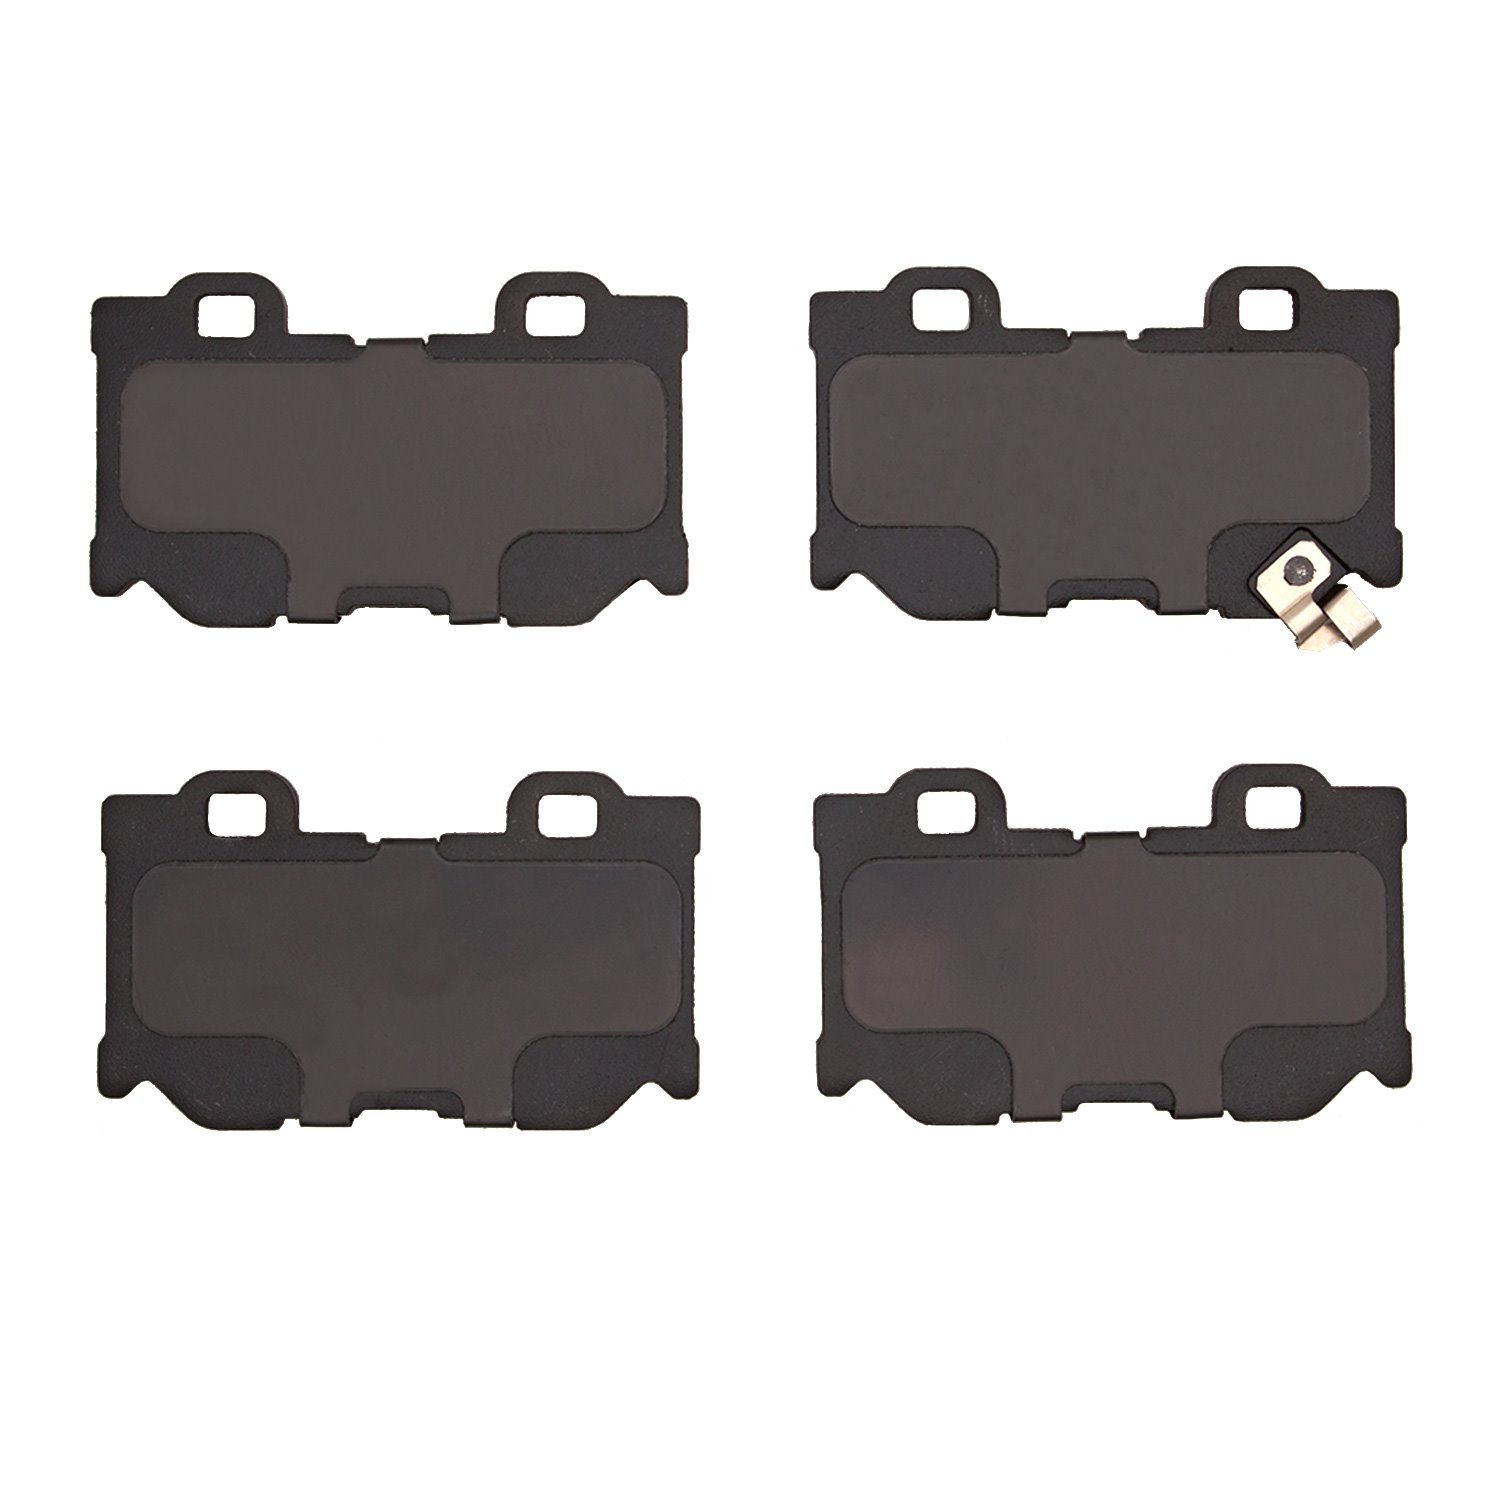 1310-1347-00 3000-Series Ceramic Brake Pads, Fits Select Infiniti/Nissan, Position: Rear